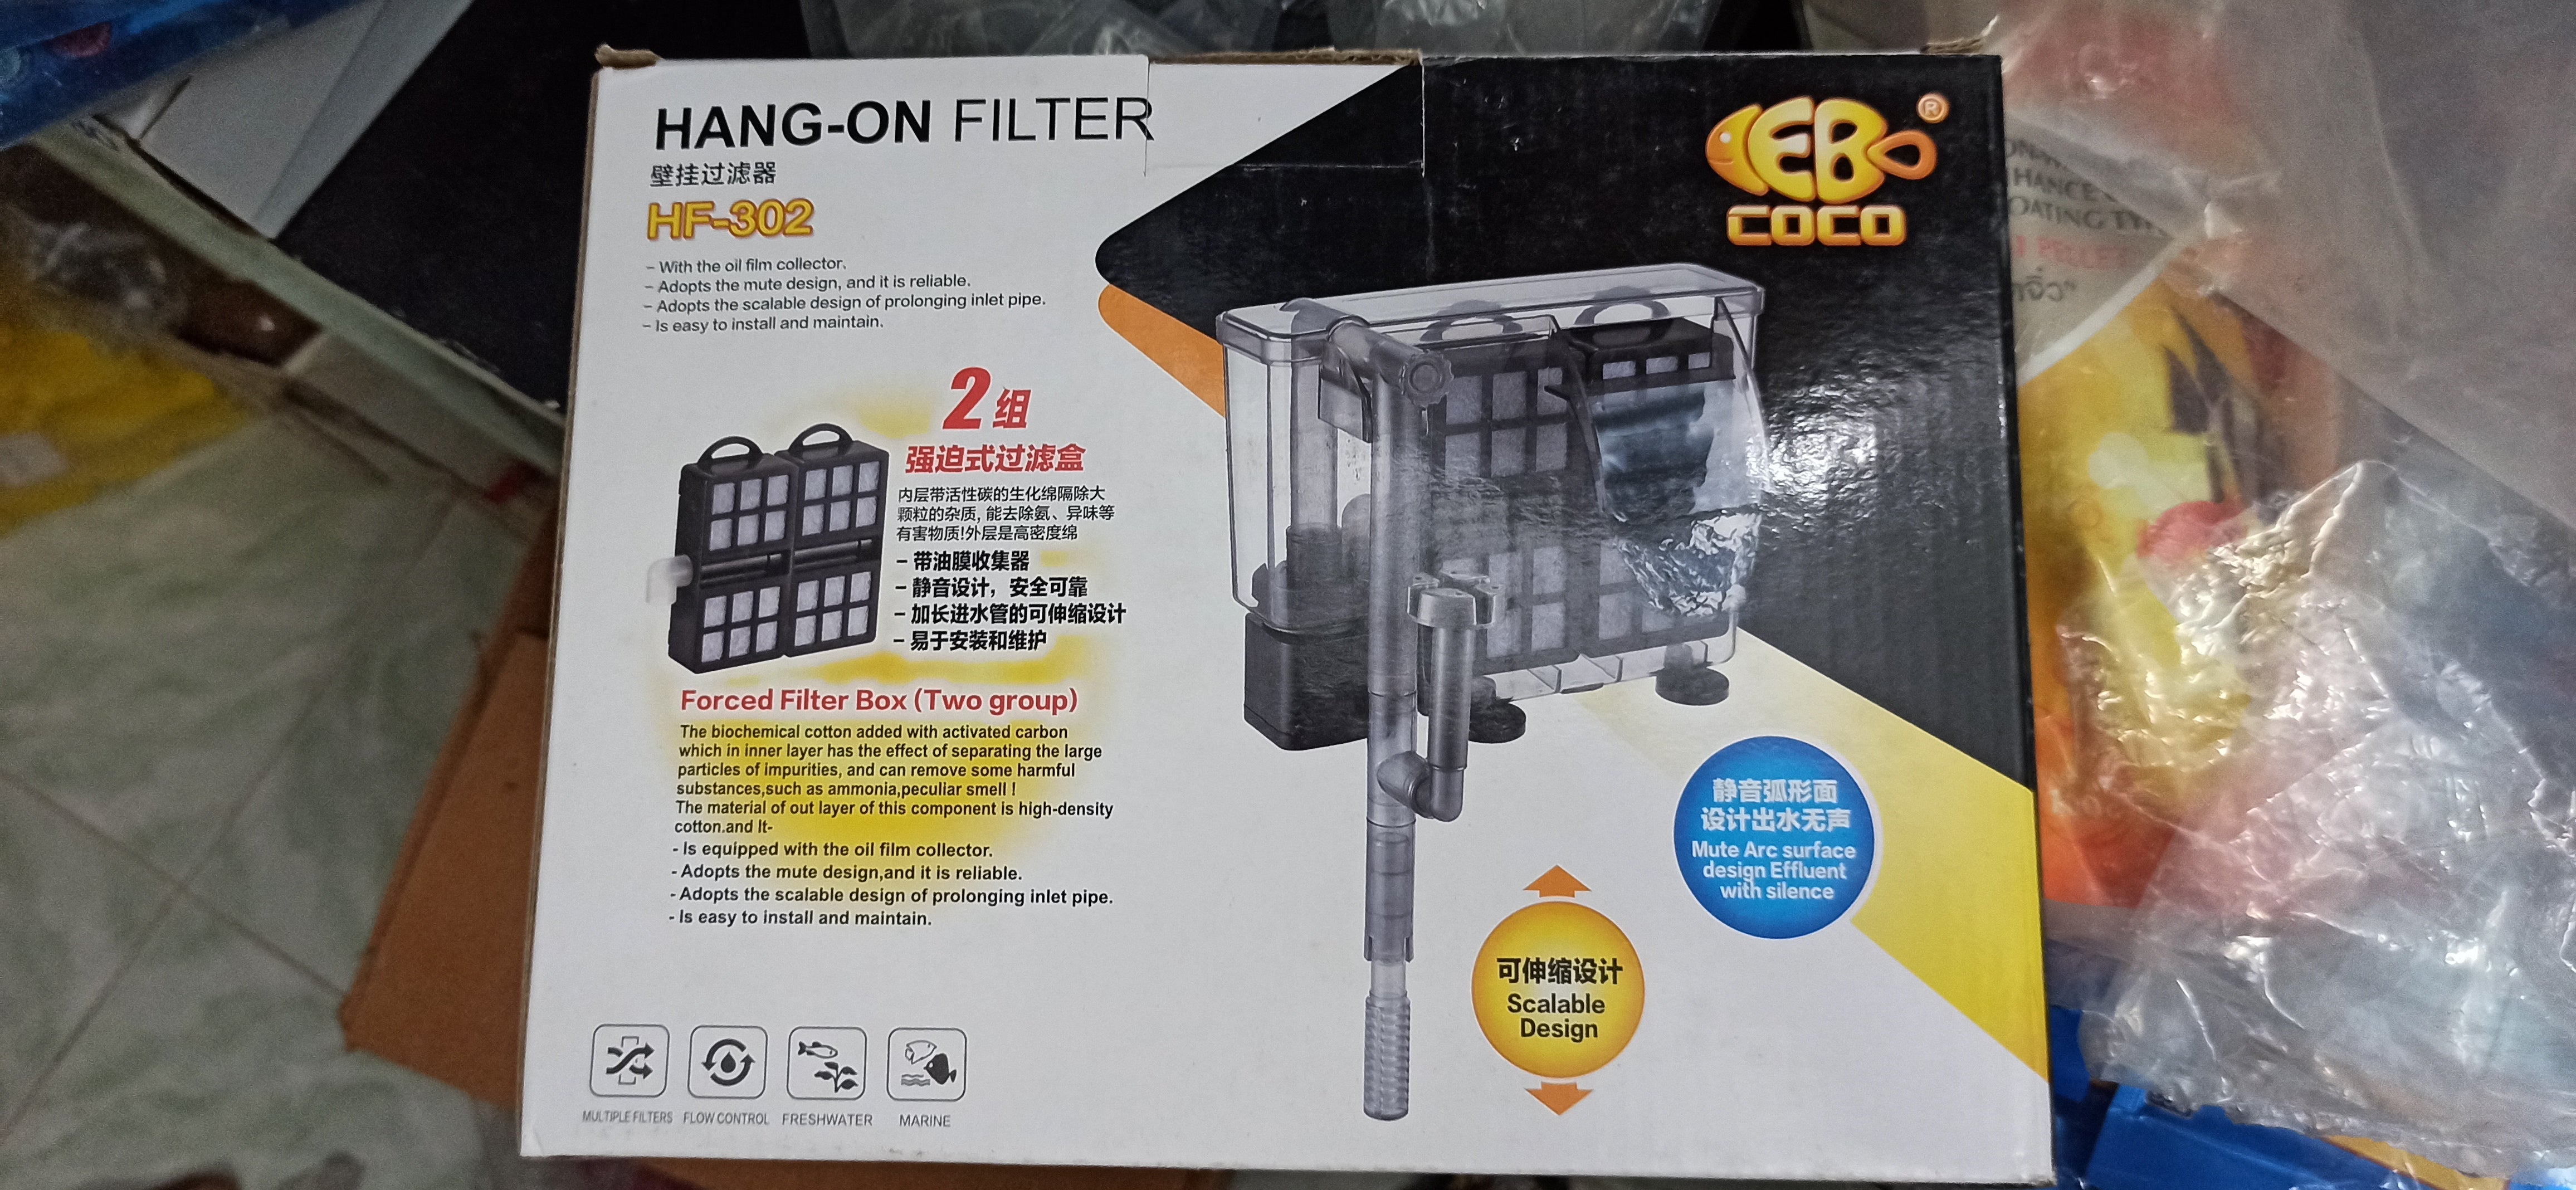 JEBO Coco HF-302 Hang-On Filter